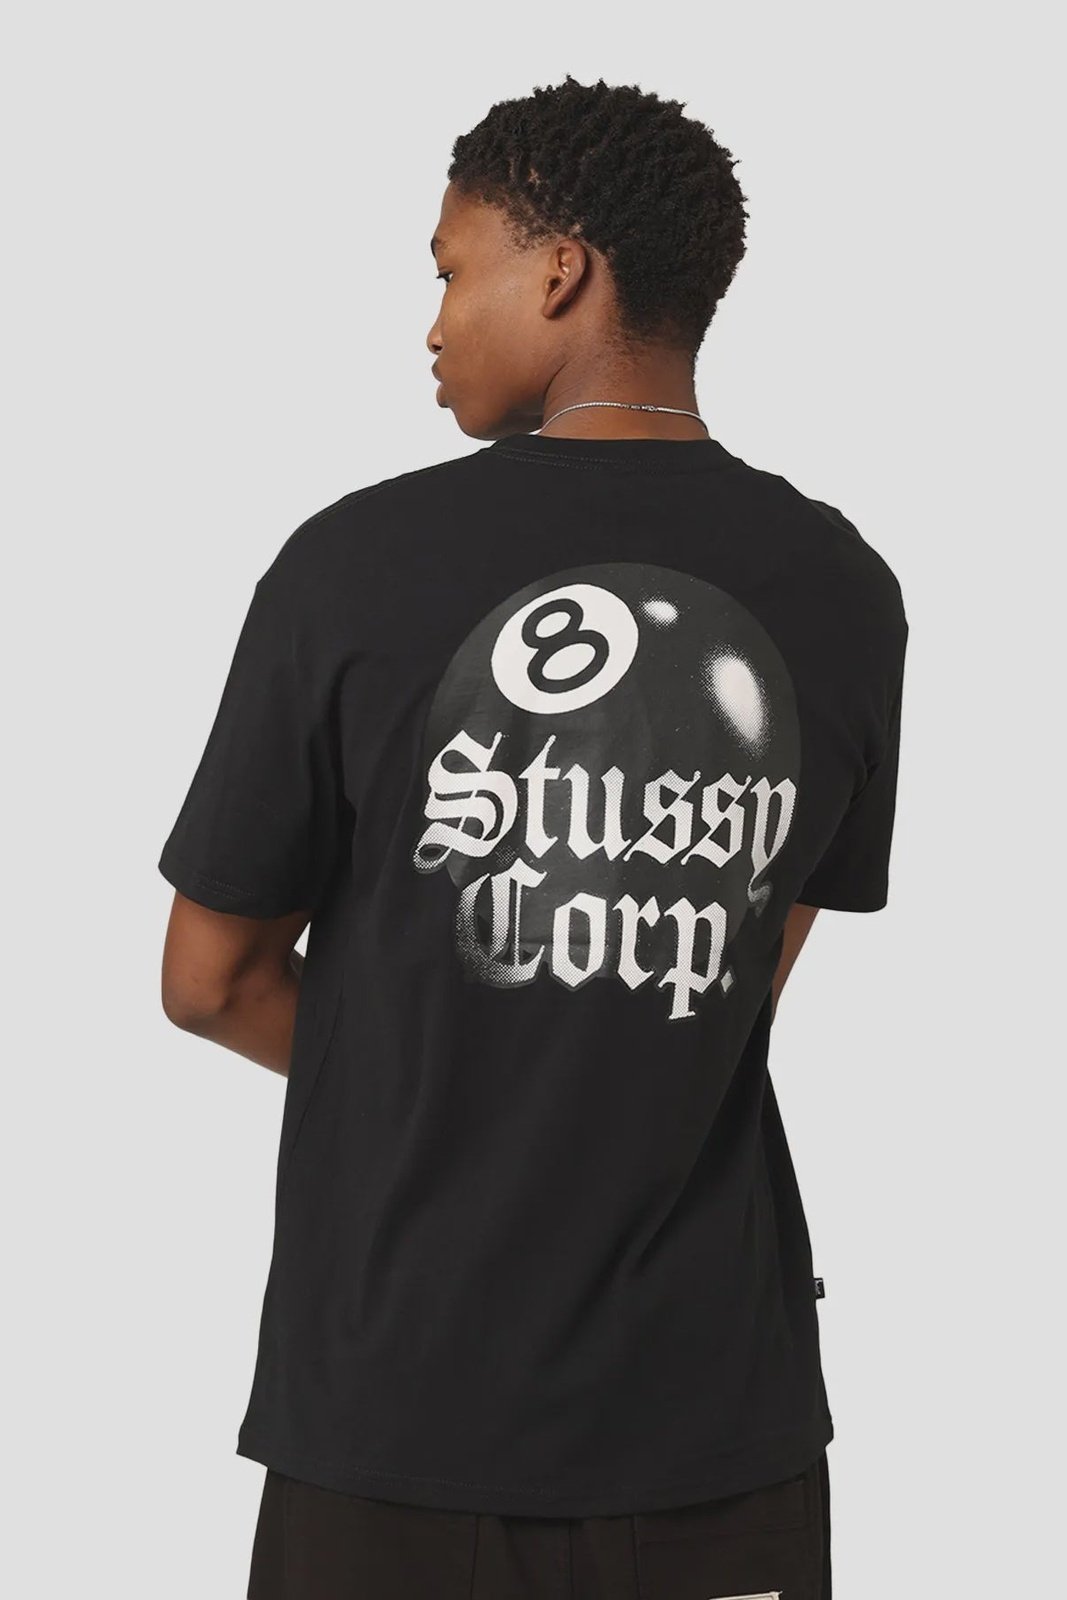 Stussy 8 Ball Corp SS Tee - Black